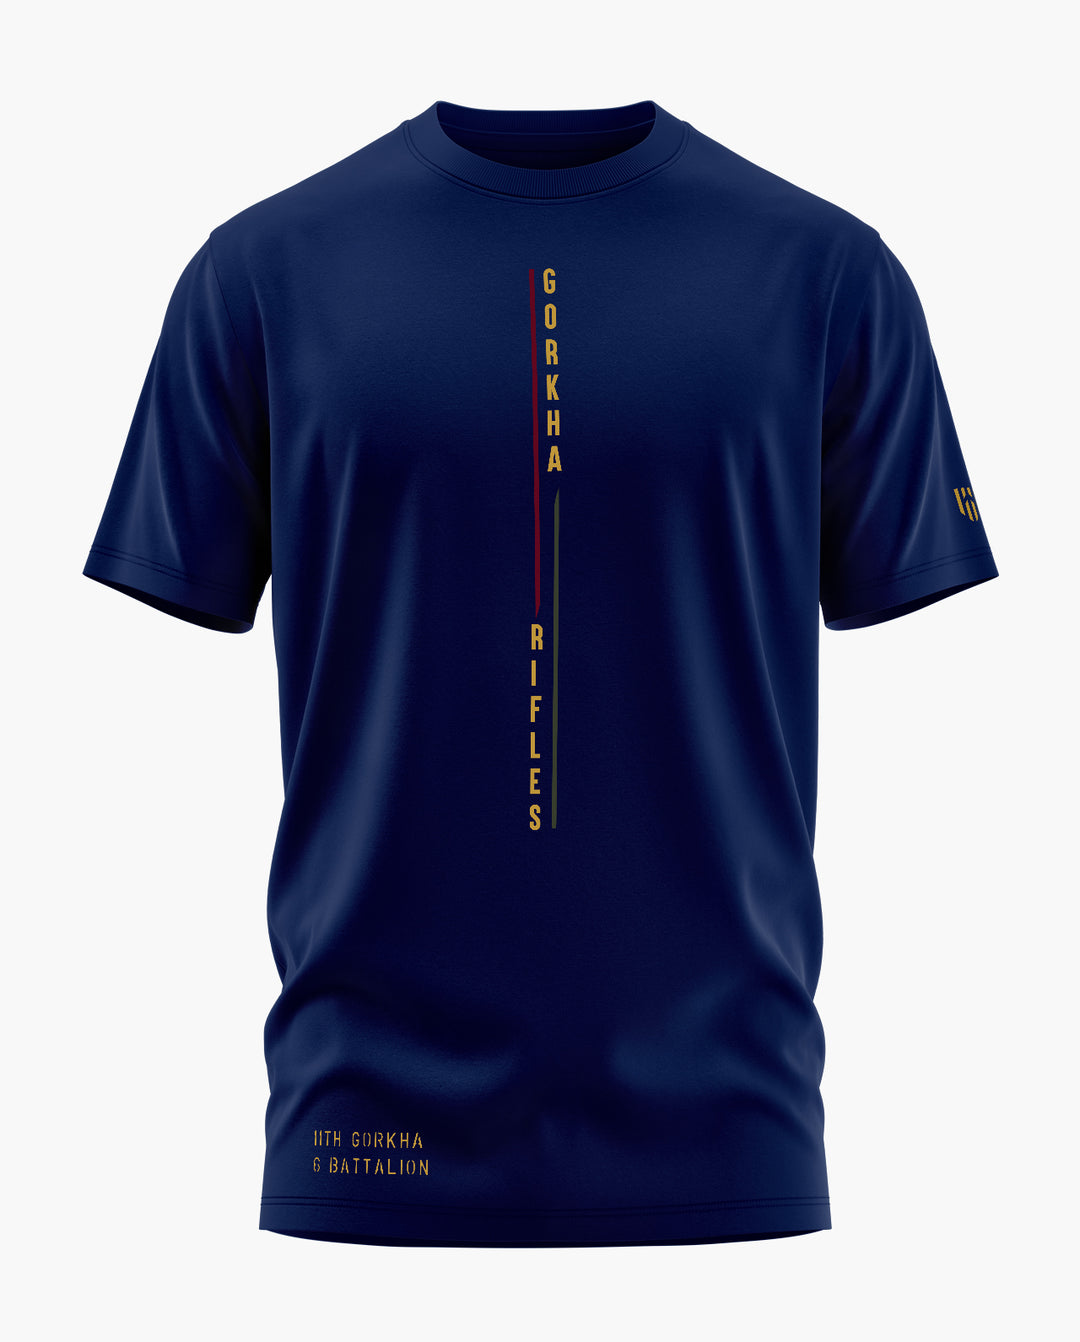 11TH GORKHA BATTALION T-Shirt